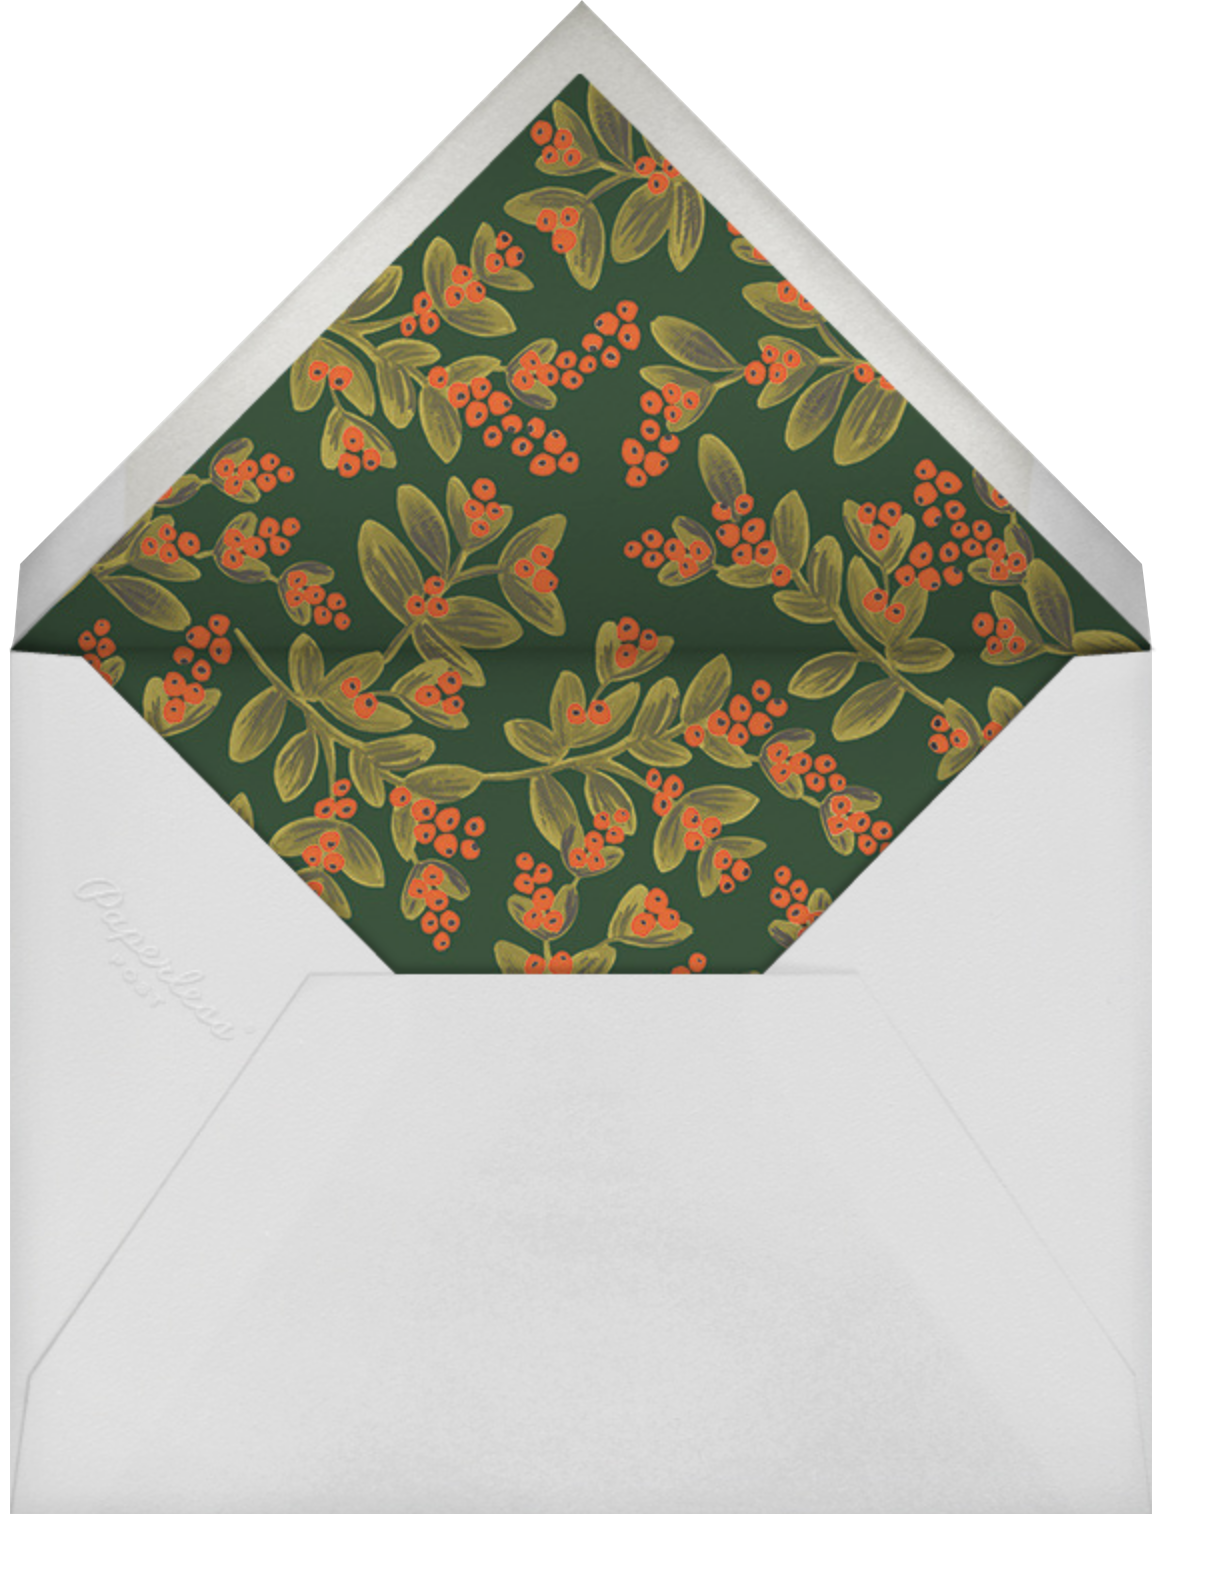 Family Stockings - Rifle Paper Co. - Envelope